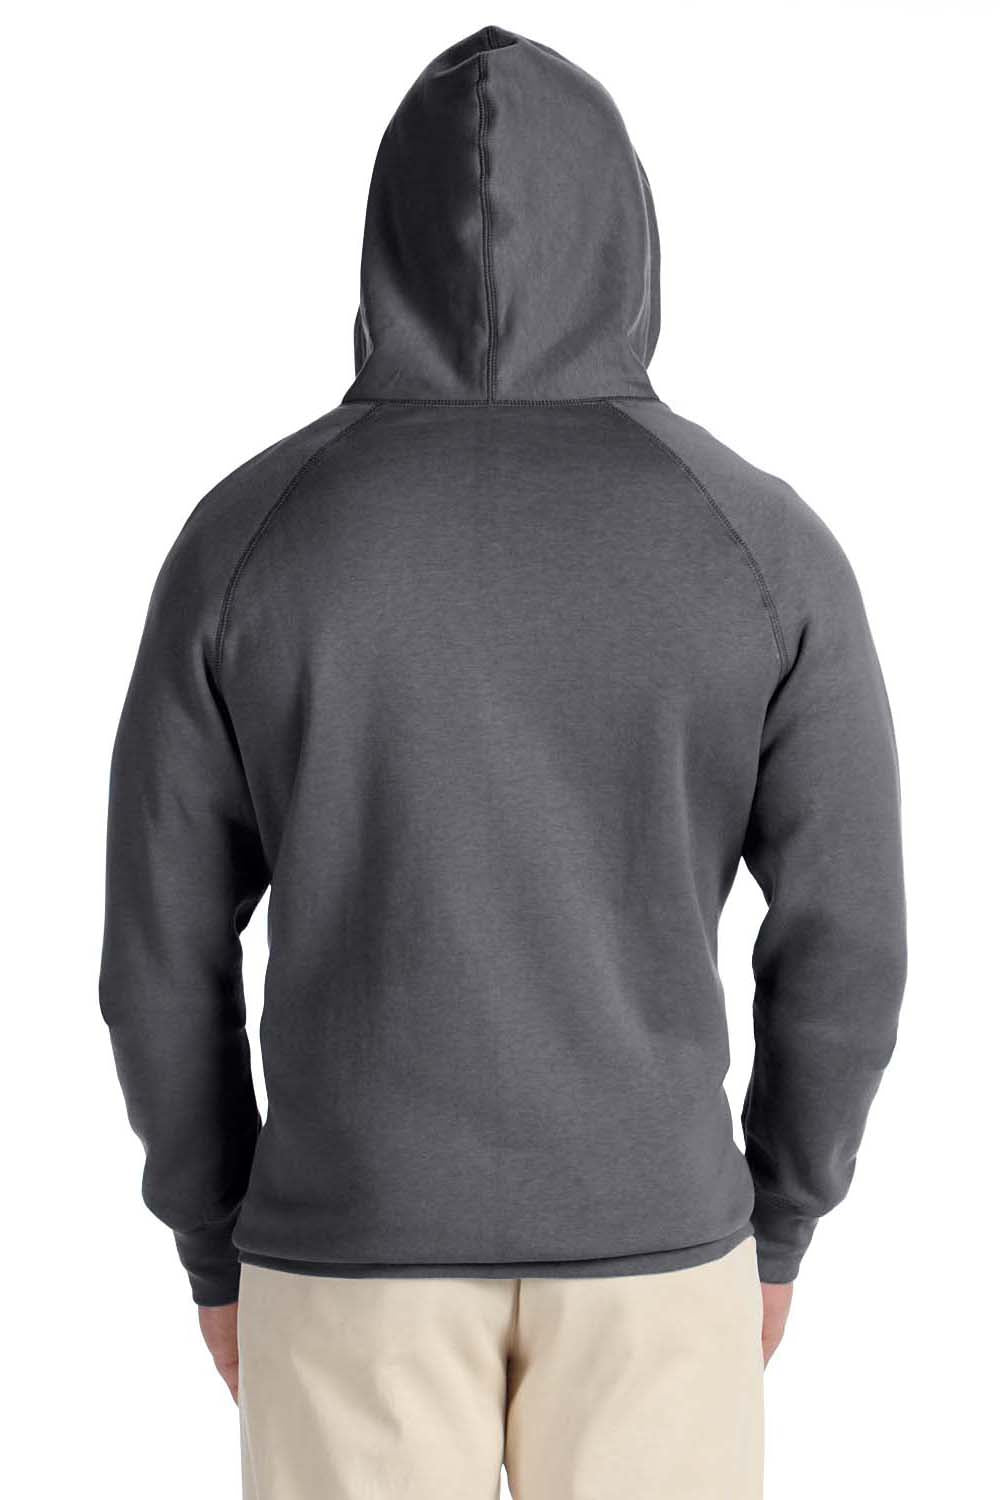 Hanes N280 Mens Nano Fleece Full Zip Hooded Sweatshirt Hoodie Heather Charcoal Grey Back